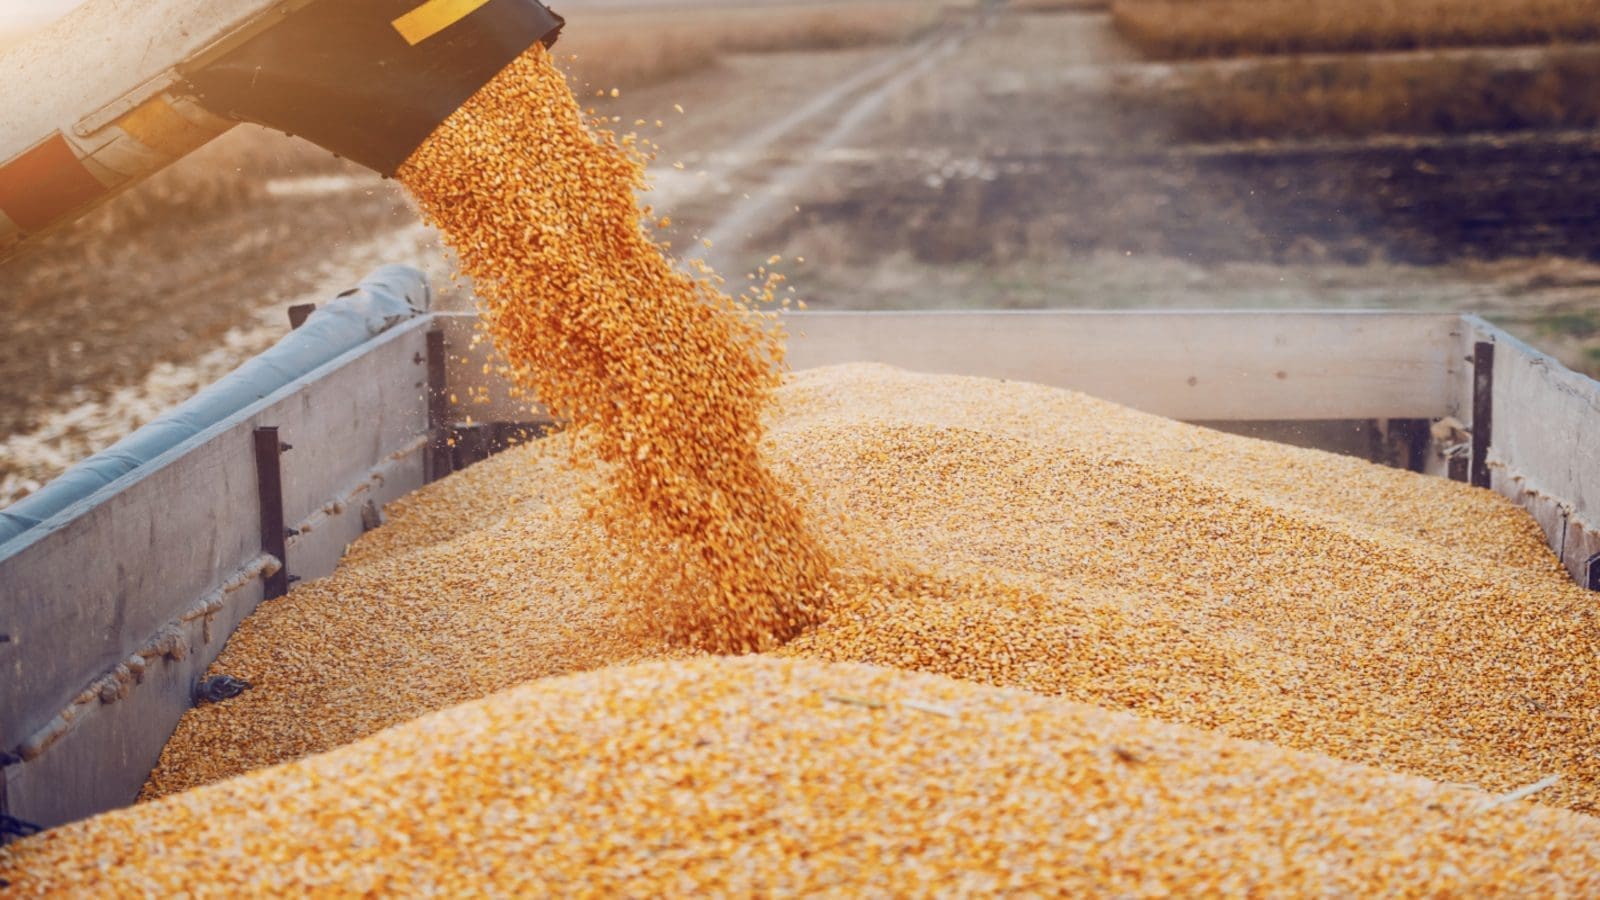 FAO Cereal Price index shots up in October driven by Ukraine export uncertainties and lower U.S. supplies